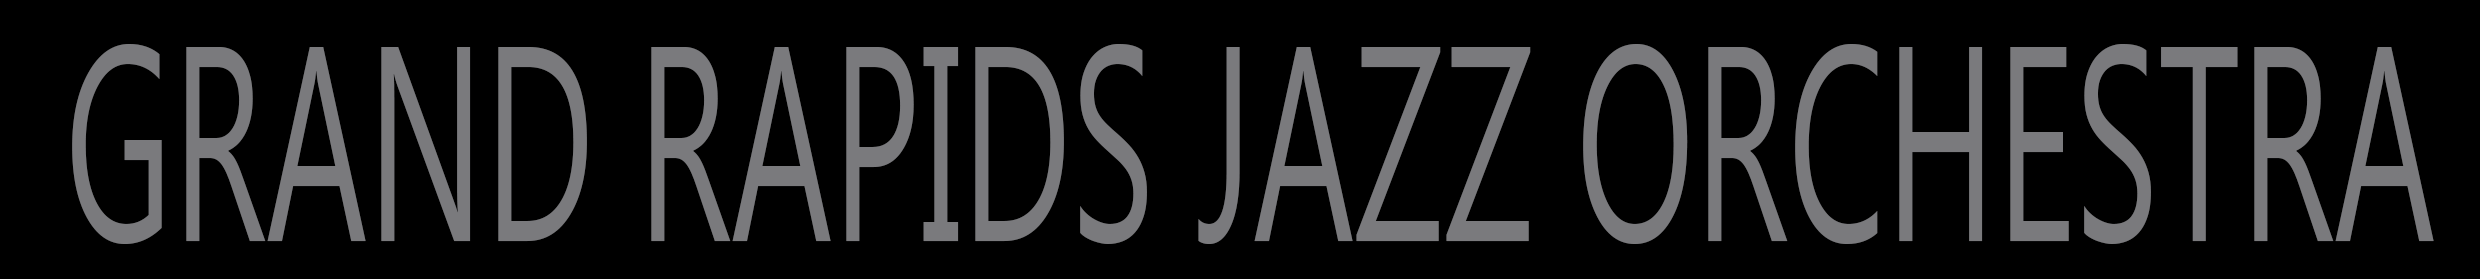 Grand Rapids Jazz Orchestra